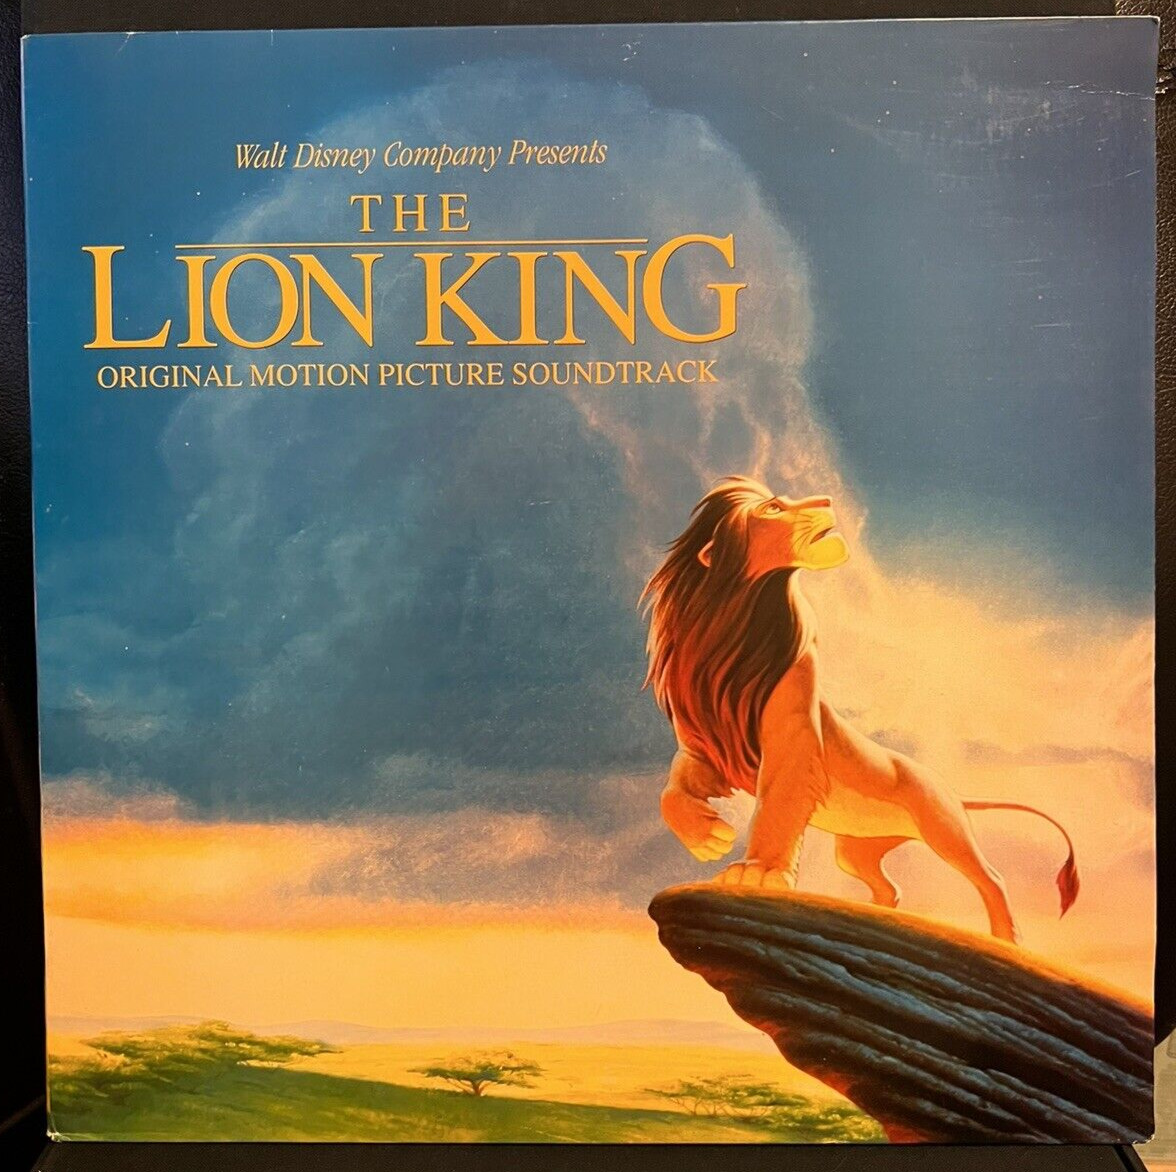 1994 The Lion King vinyl LP record soundtrack Walt Disney Records Brazil, rare